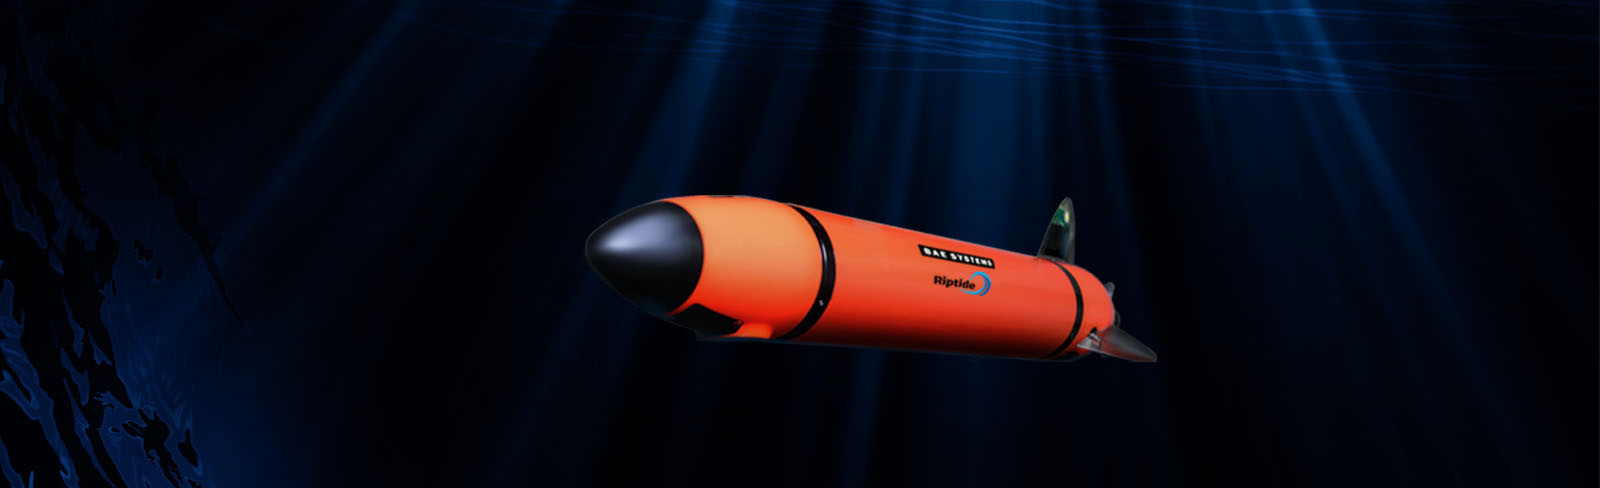 Riptide unmanned undersea vehicles